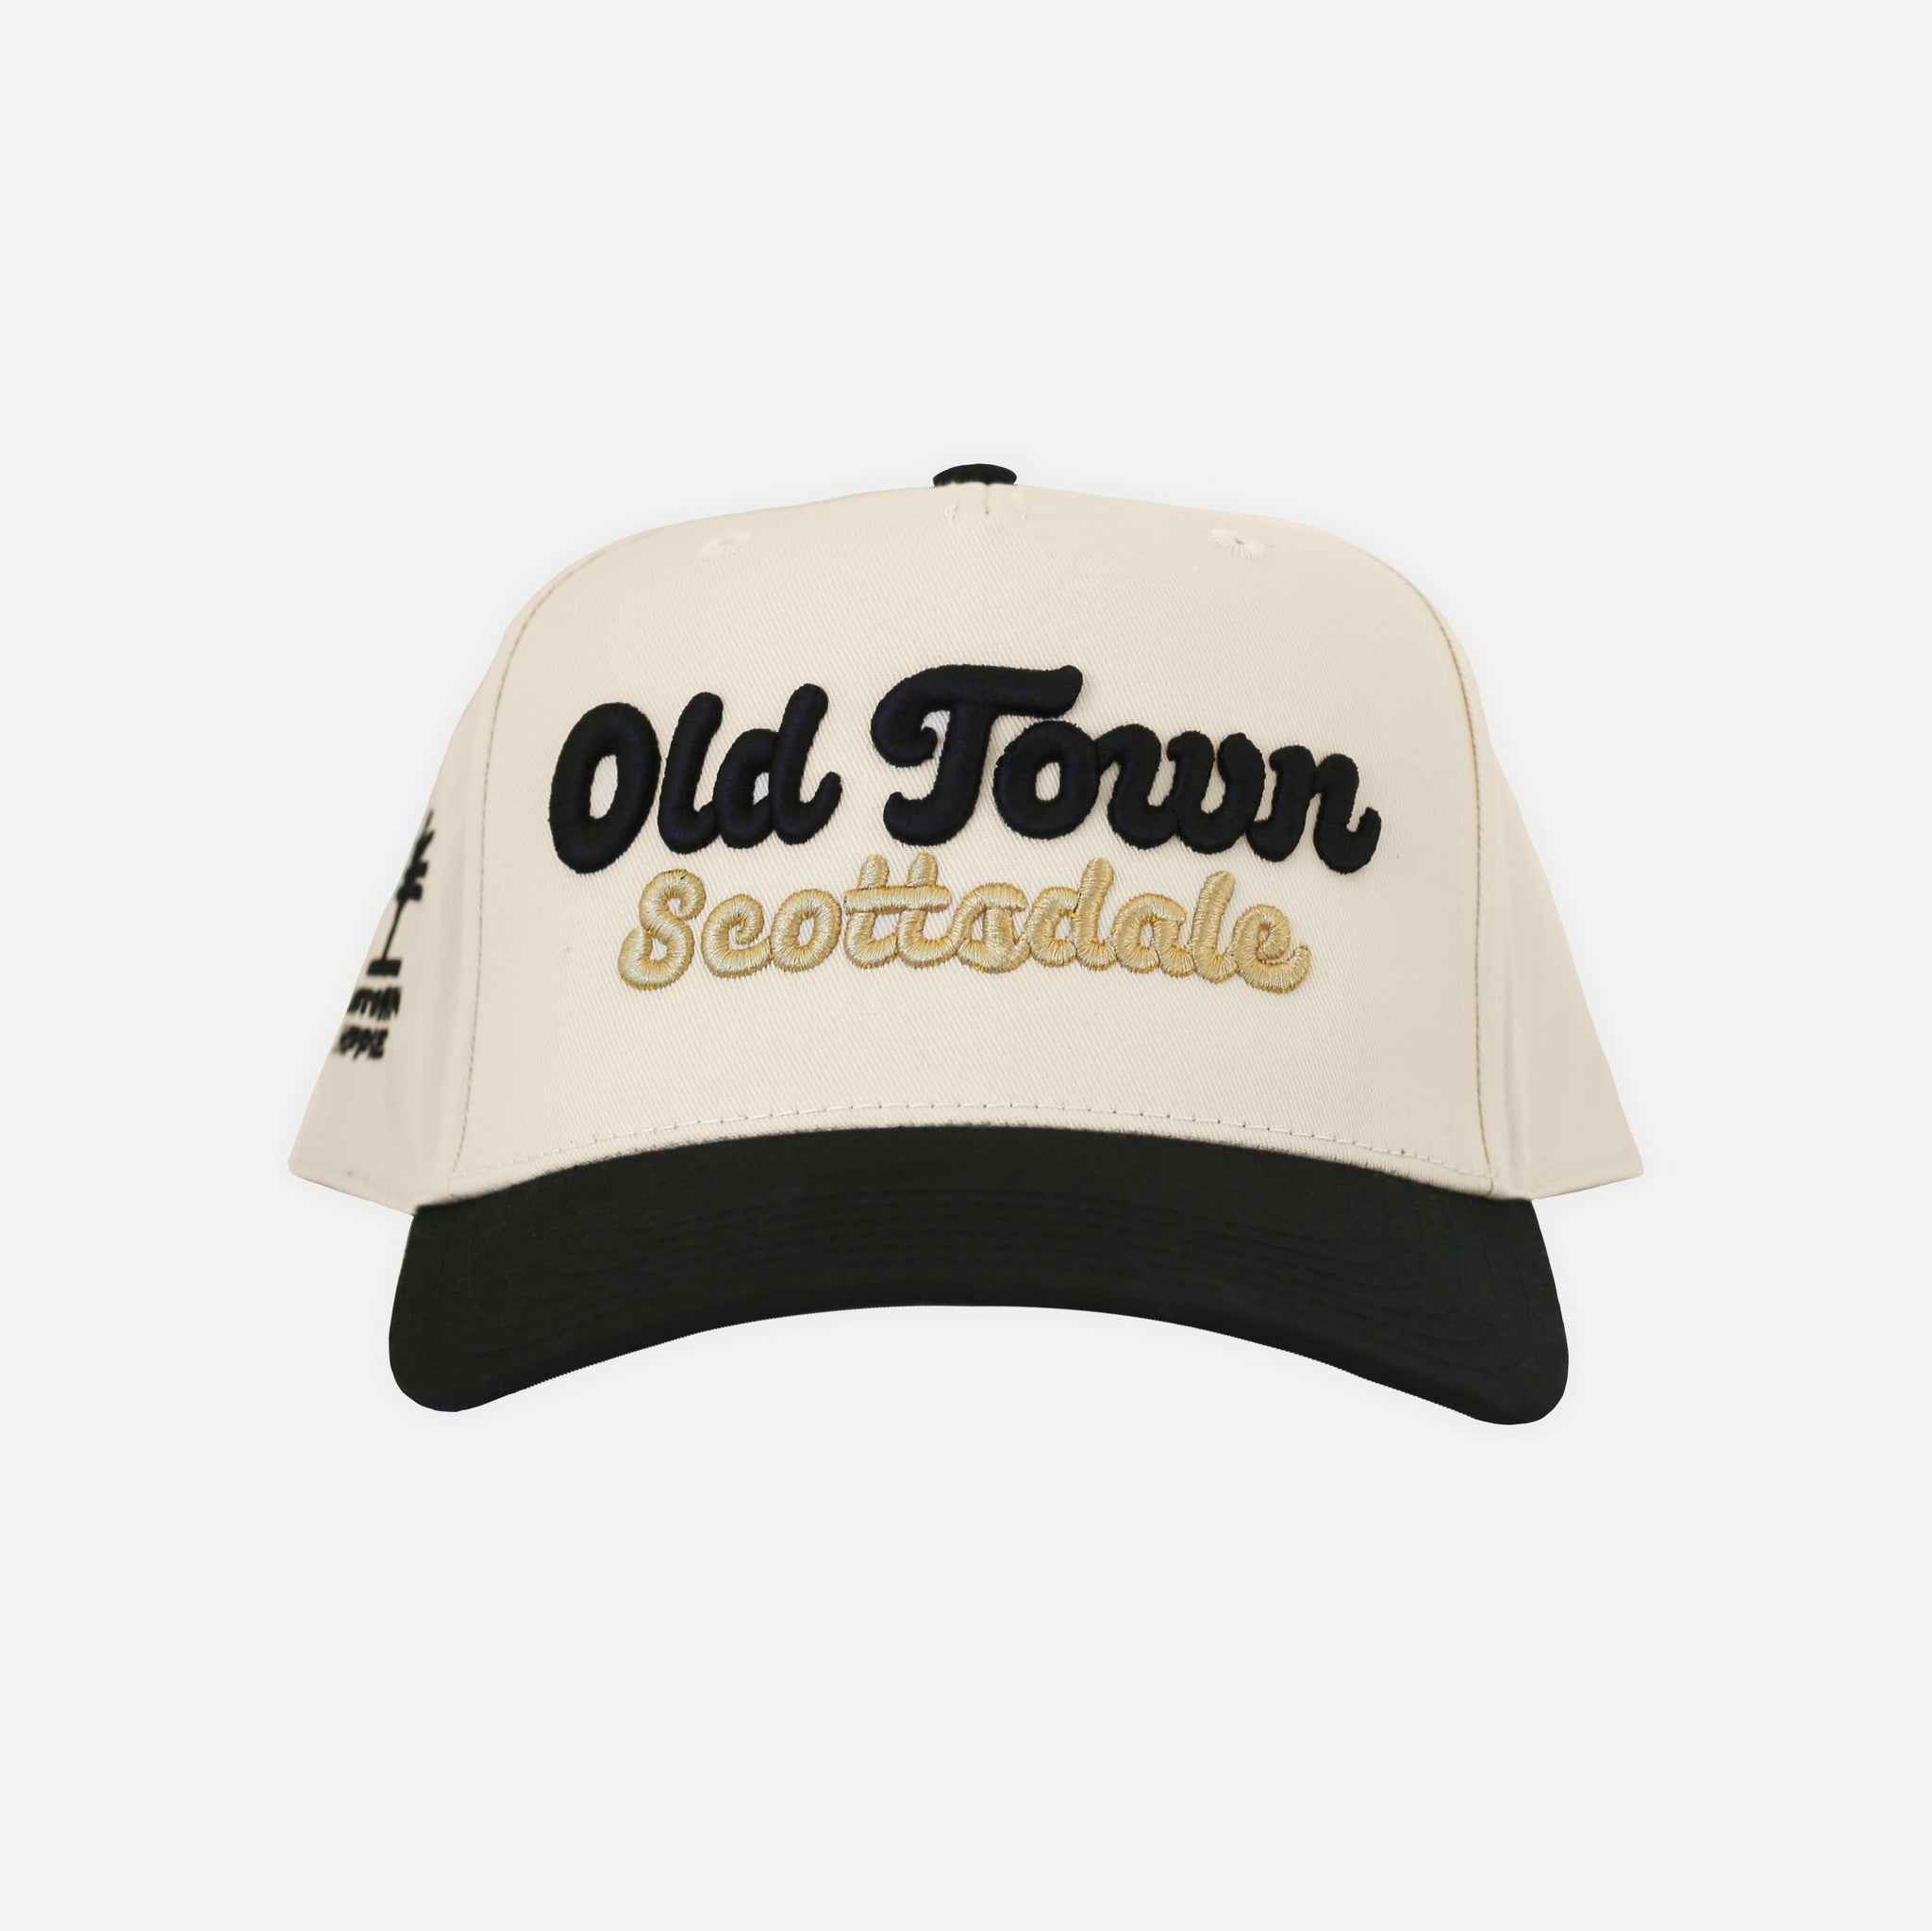 Old Town Scottsdale Snapback Hat